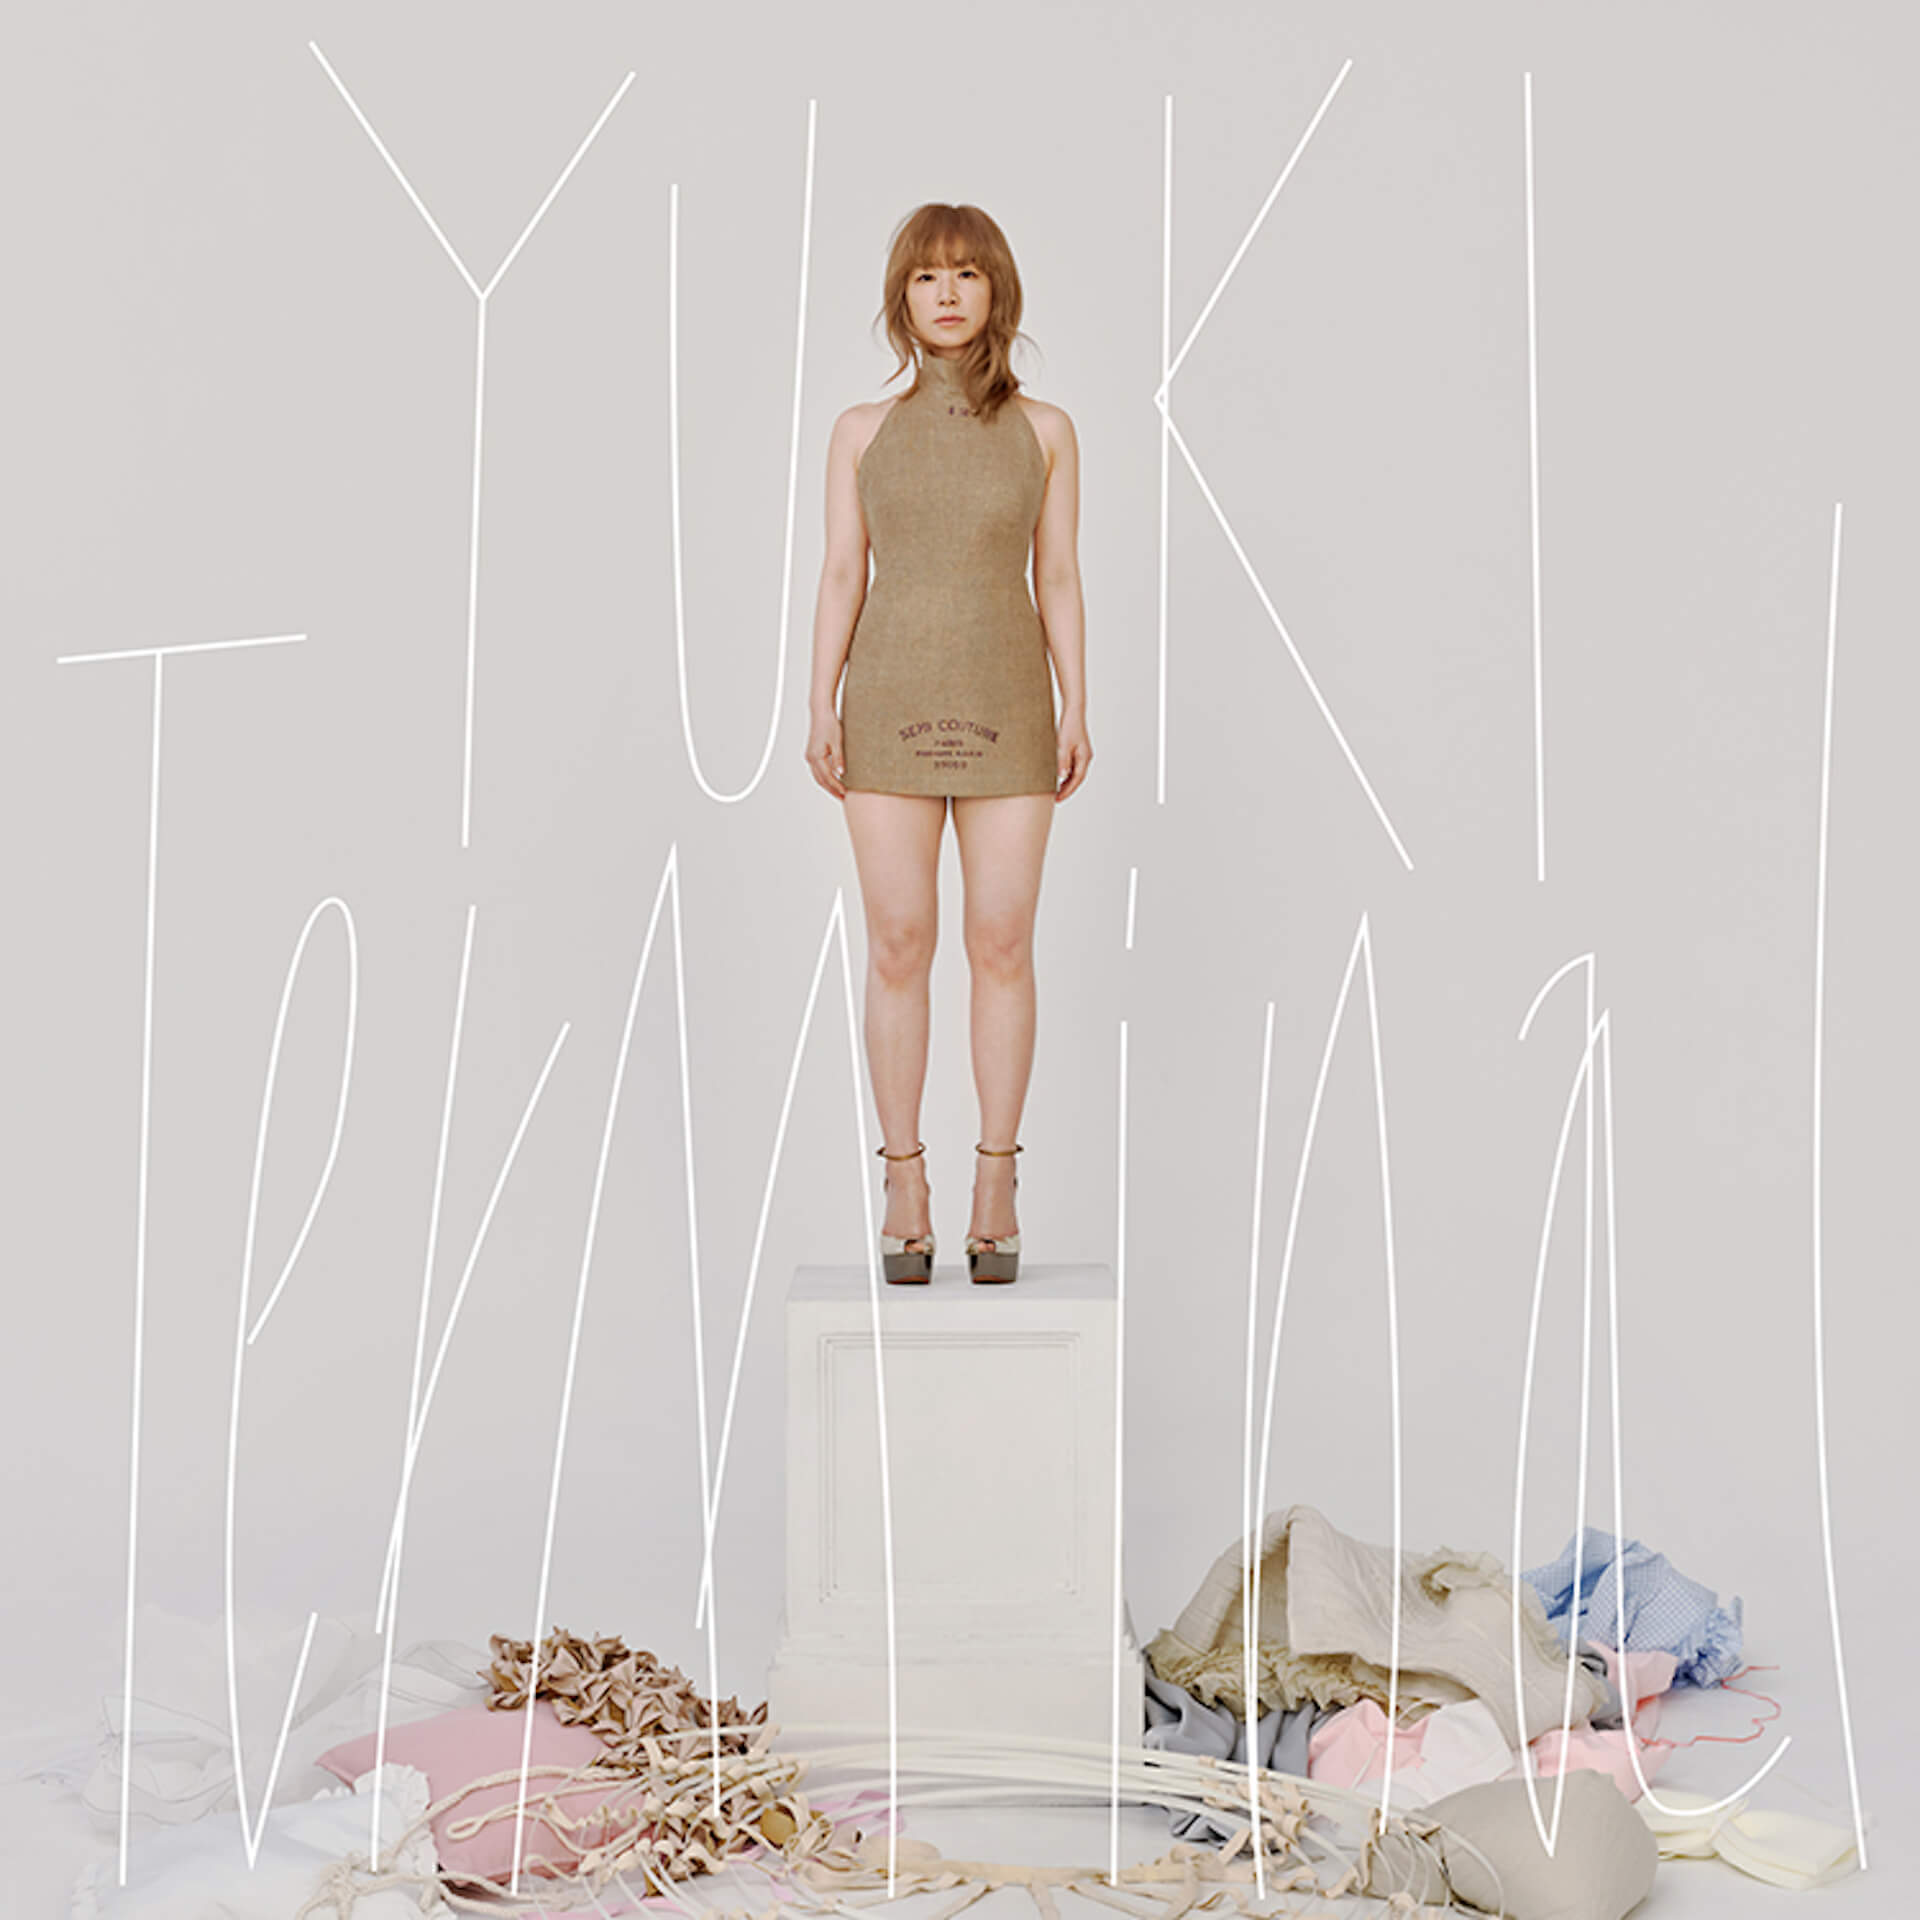 YUKIのニューアルバム『Terminal』のティザー映像が解禁！全13曲のダイジェスト試聴可能 music210421_yuki_4